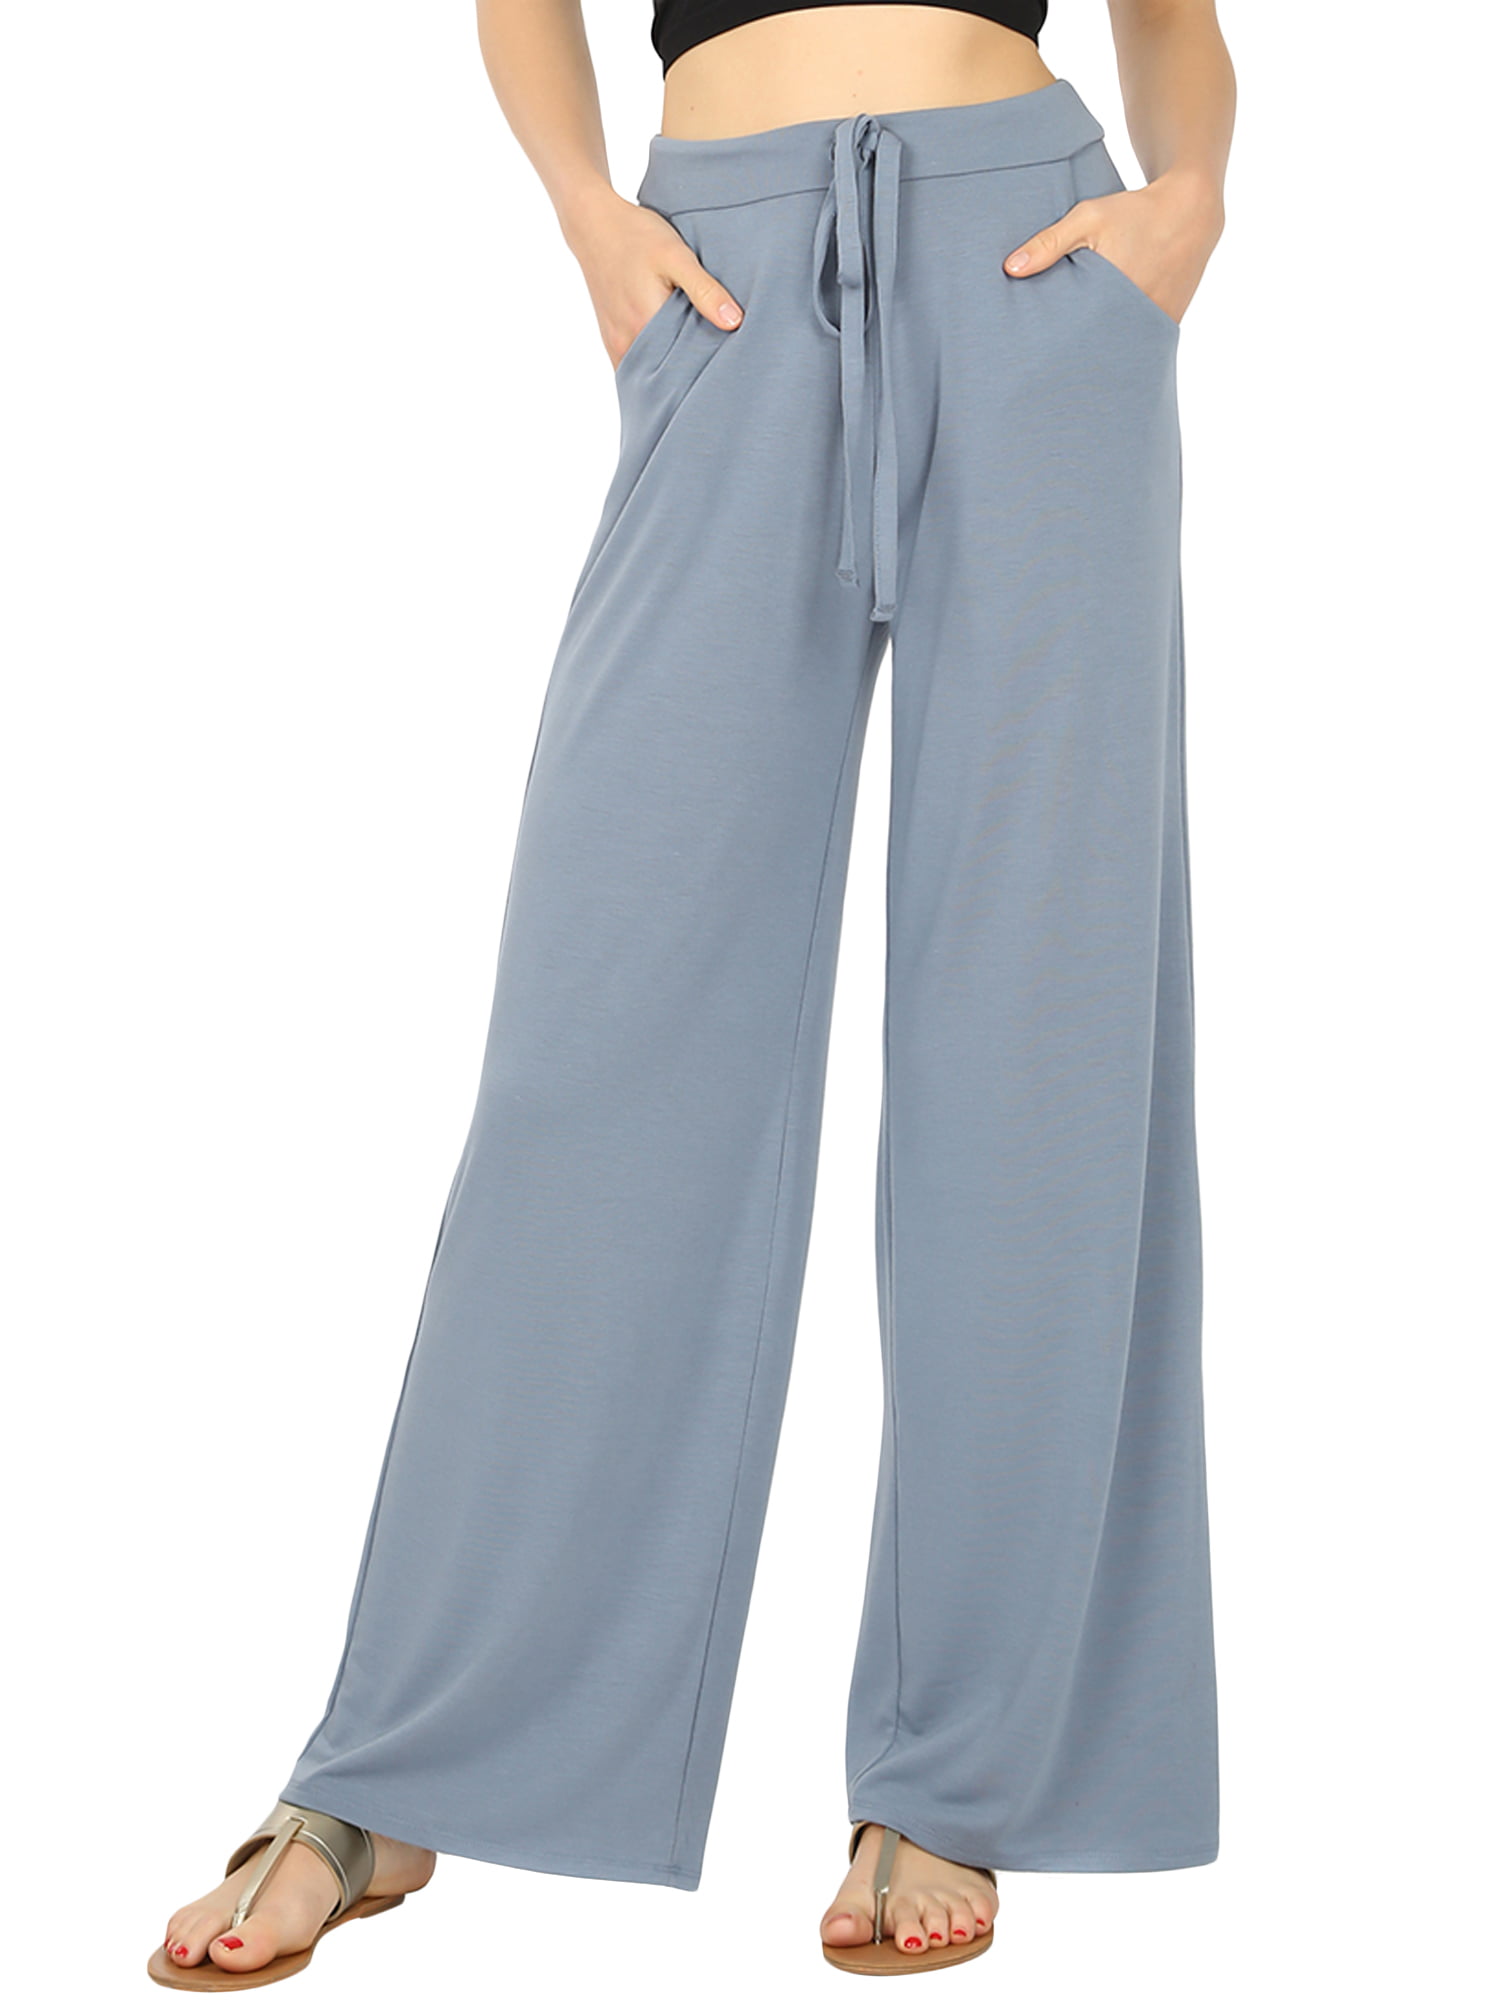 Andongnywell Womens Pants Loose Yoga Sweatpants Drawstring Comfy Lounge Pajama Pants with Pockets Trousers